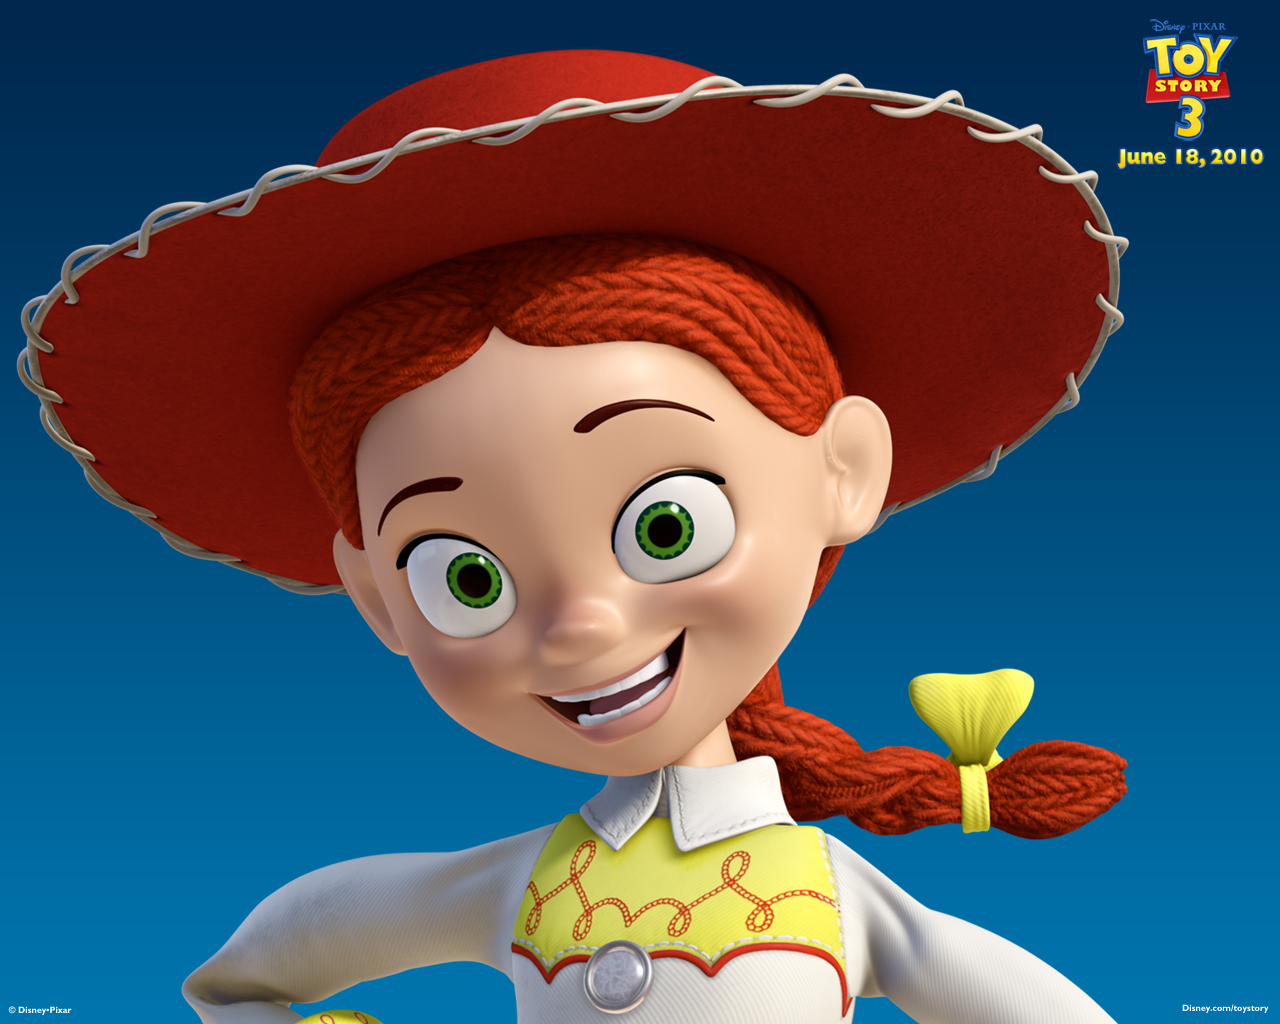 "Toy Story 3" desktop wallpaper number 3 (1280 x 1024 pixels)